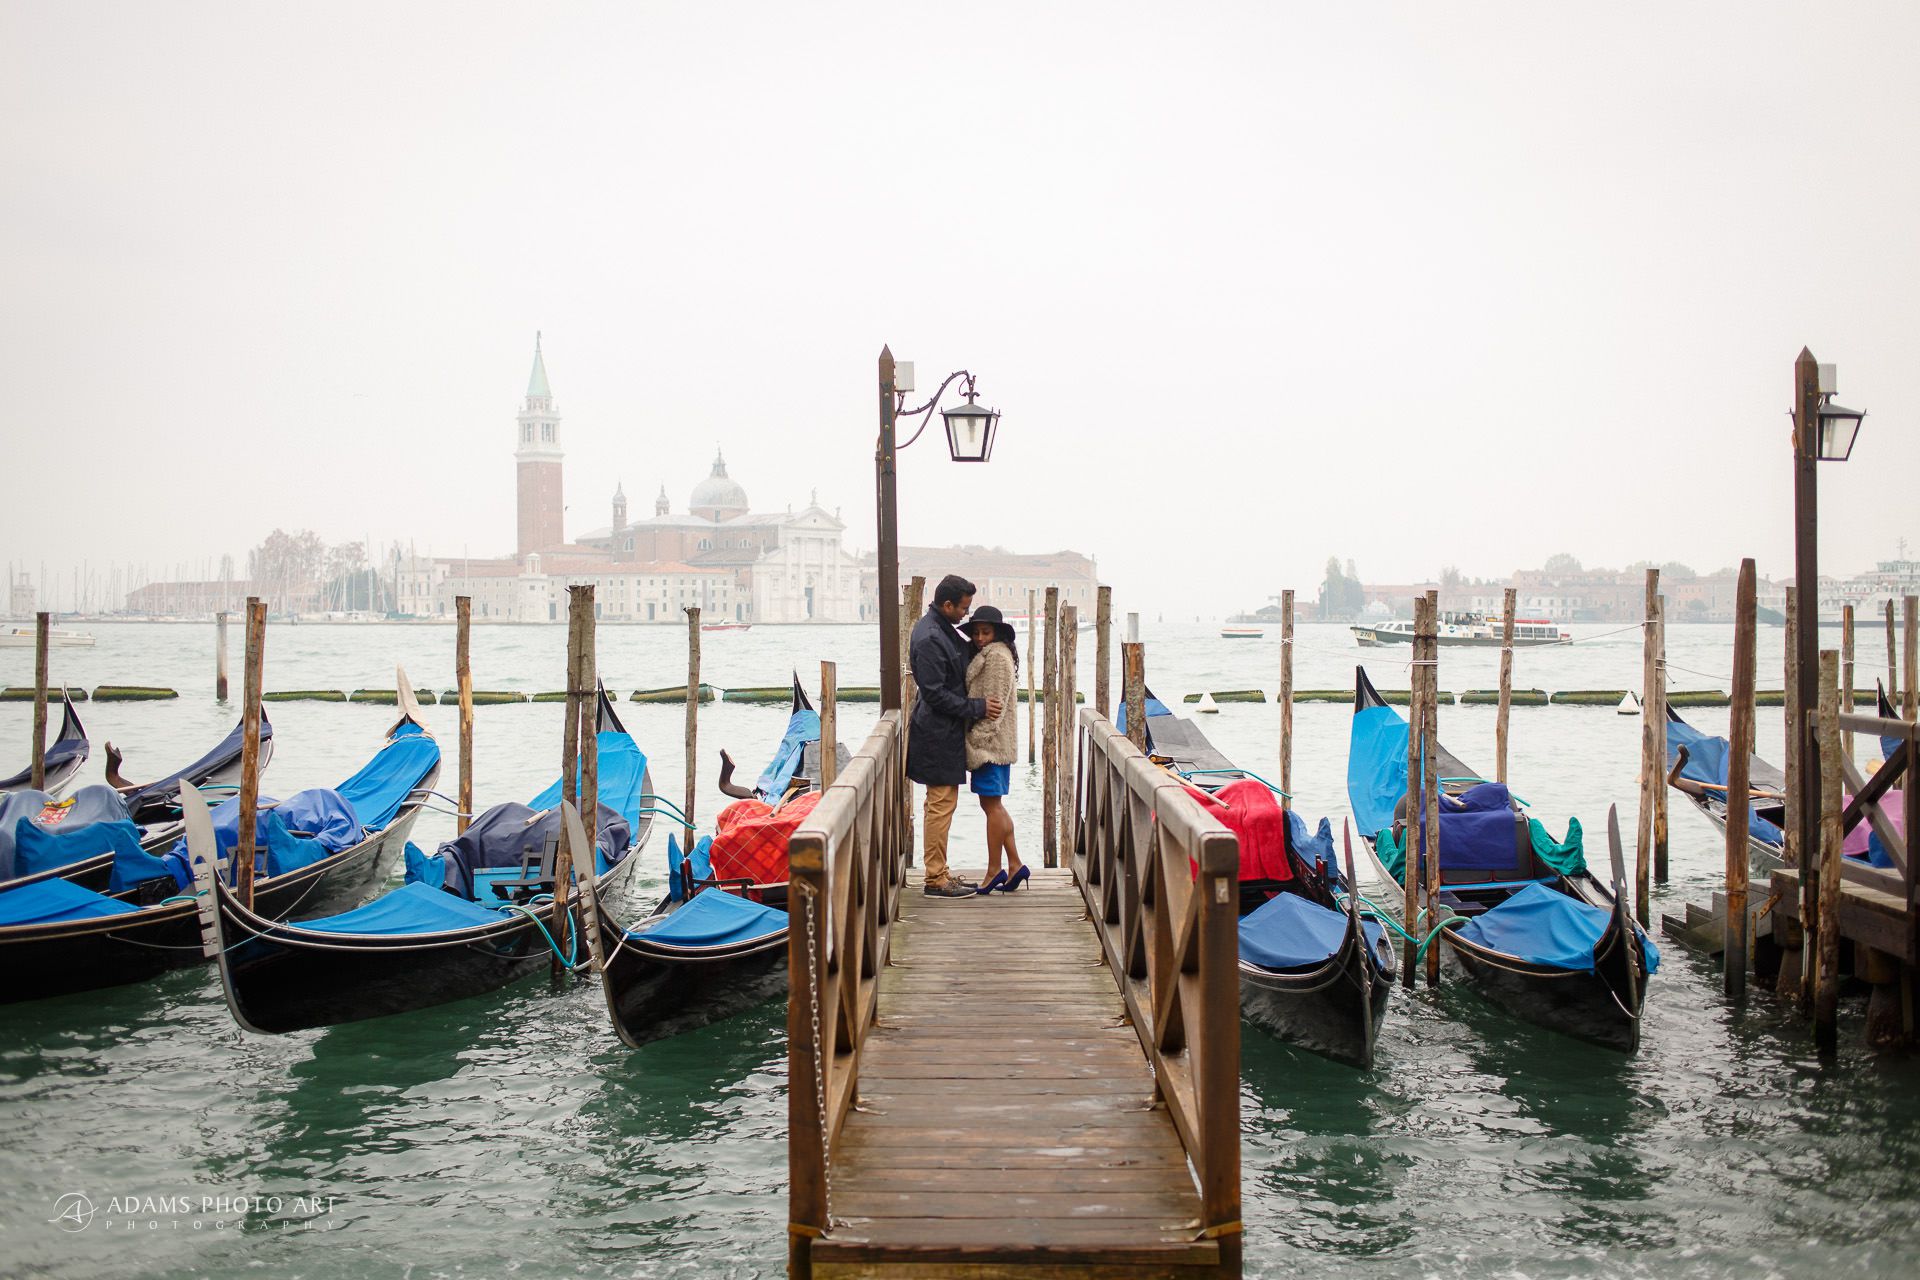 the couple between gondolas on a wooden bridge in Venice